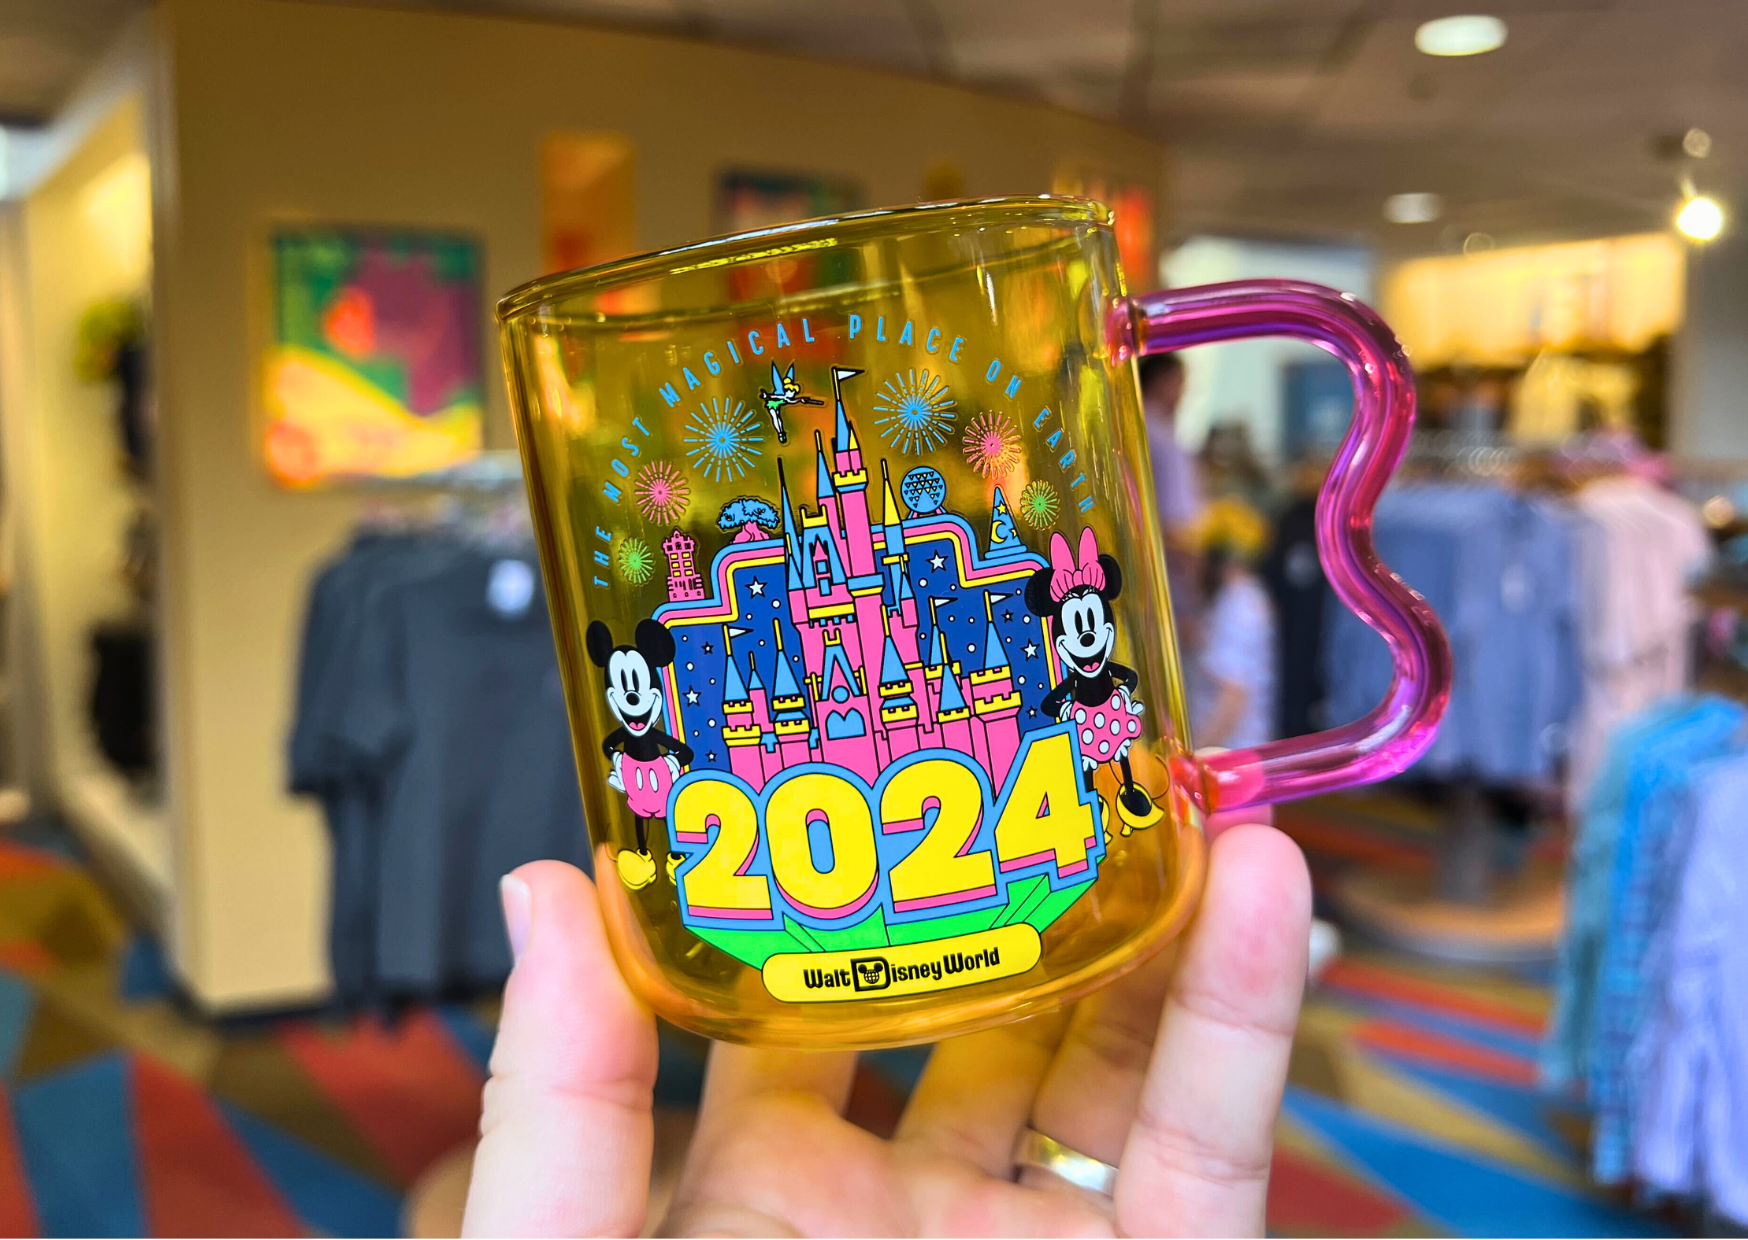 Disney Coffee Mug - 2024 Walt Disney World Logo Mickey and Minnie